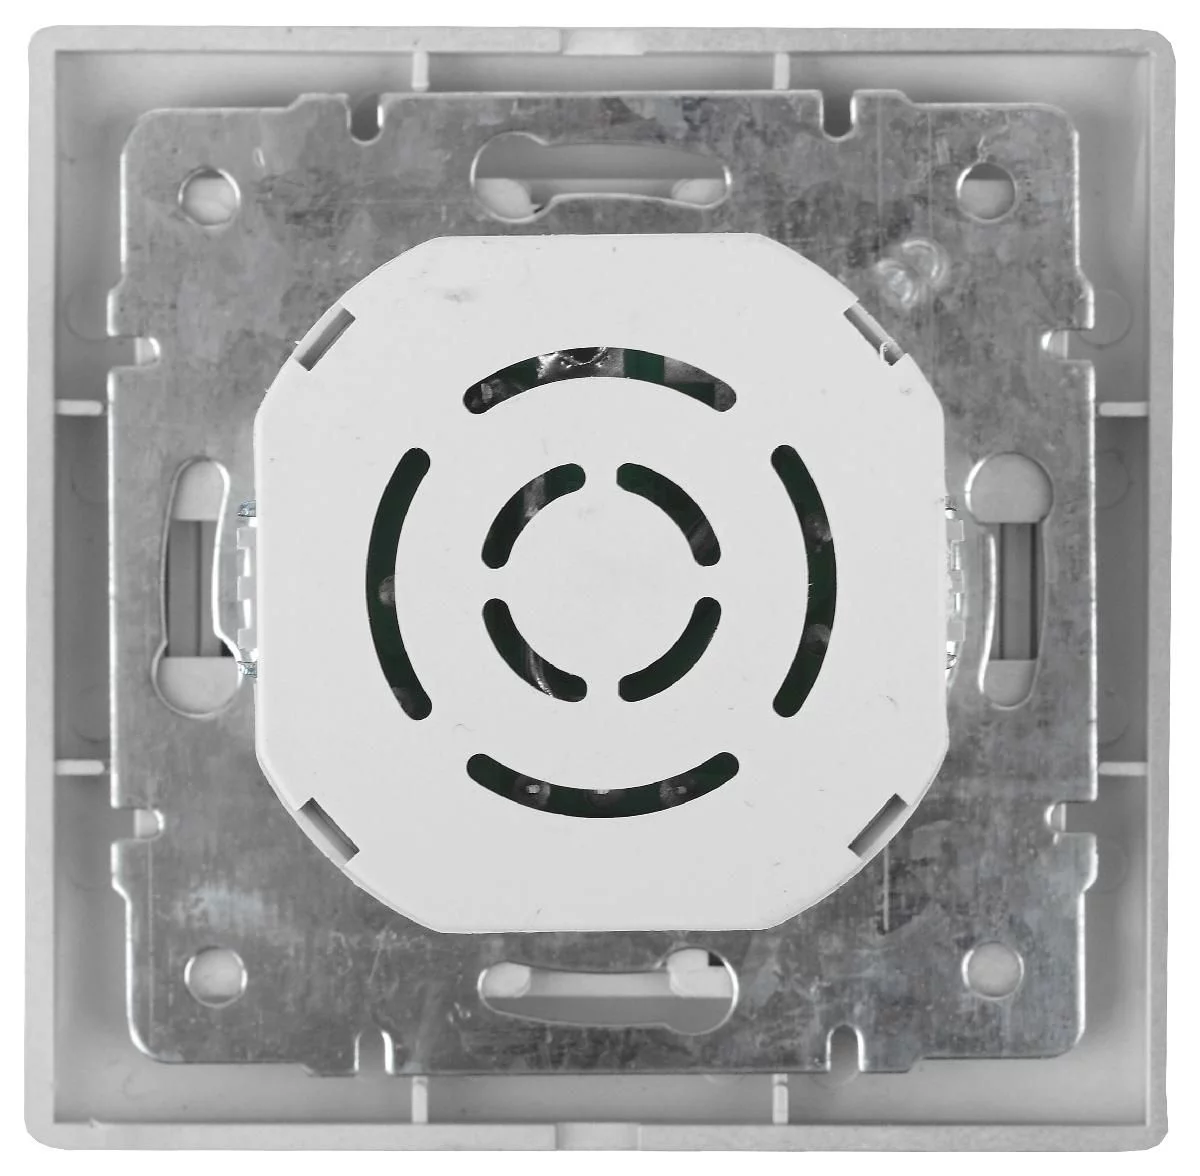 1-401-01 Intro Светорегулятор поворотный, 600Вт 230В, IP20, СУ, Plano, белый (10/200/2000)